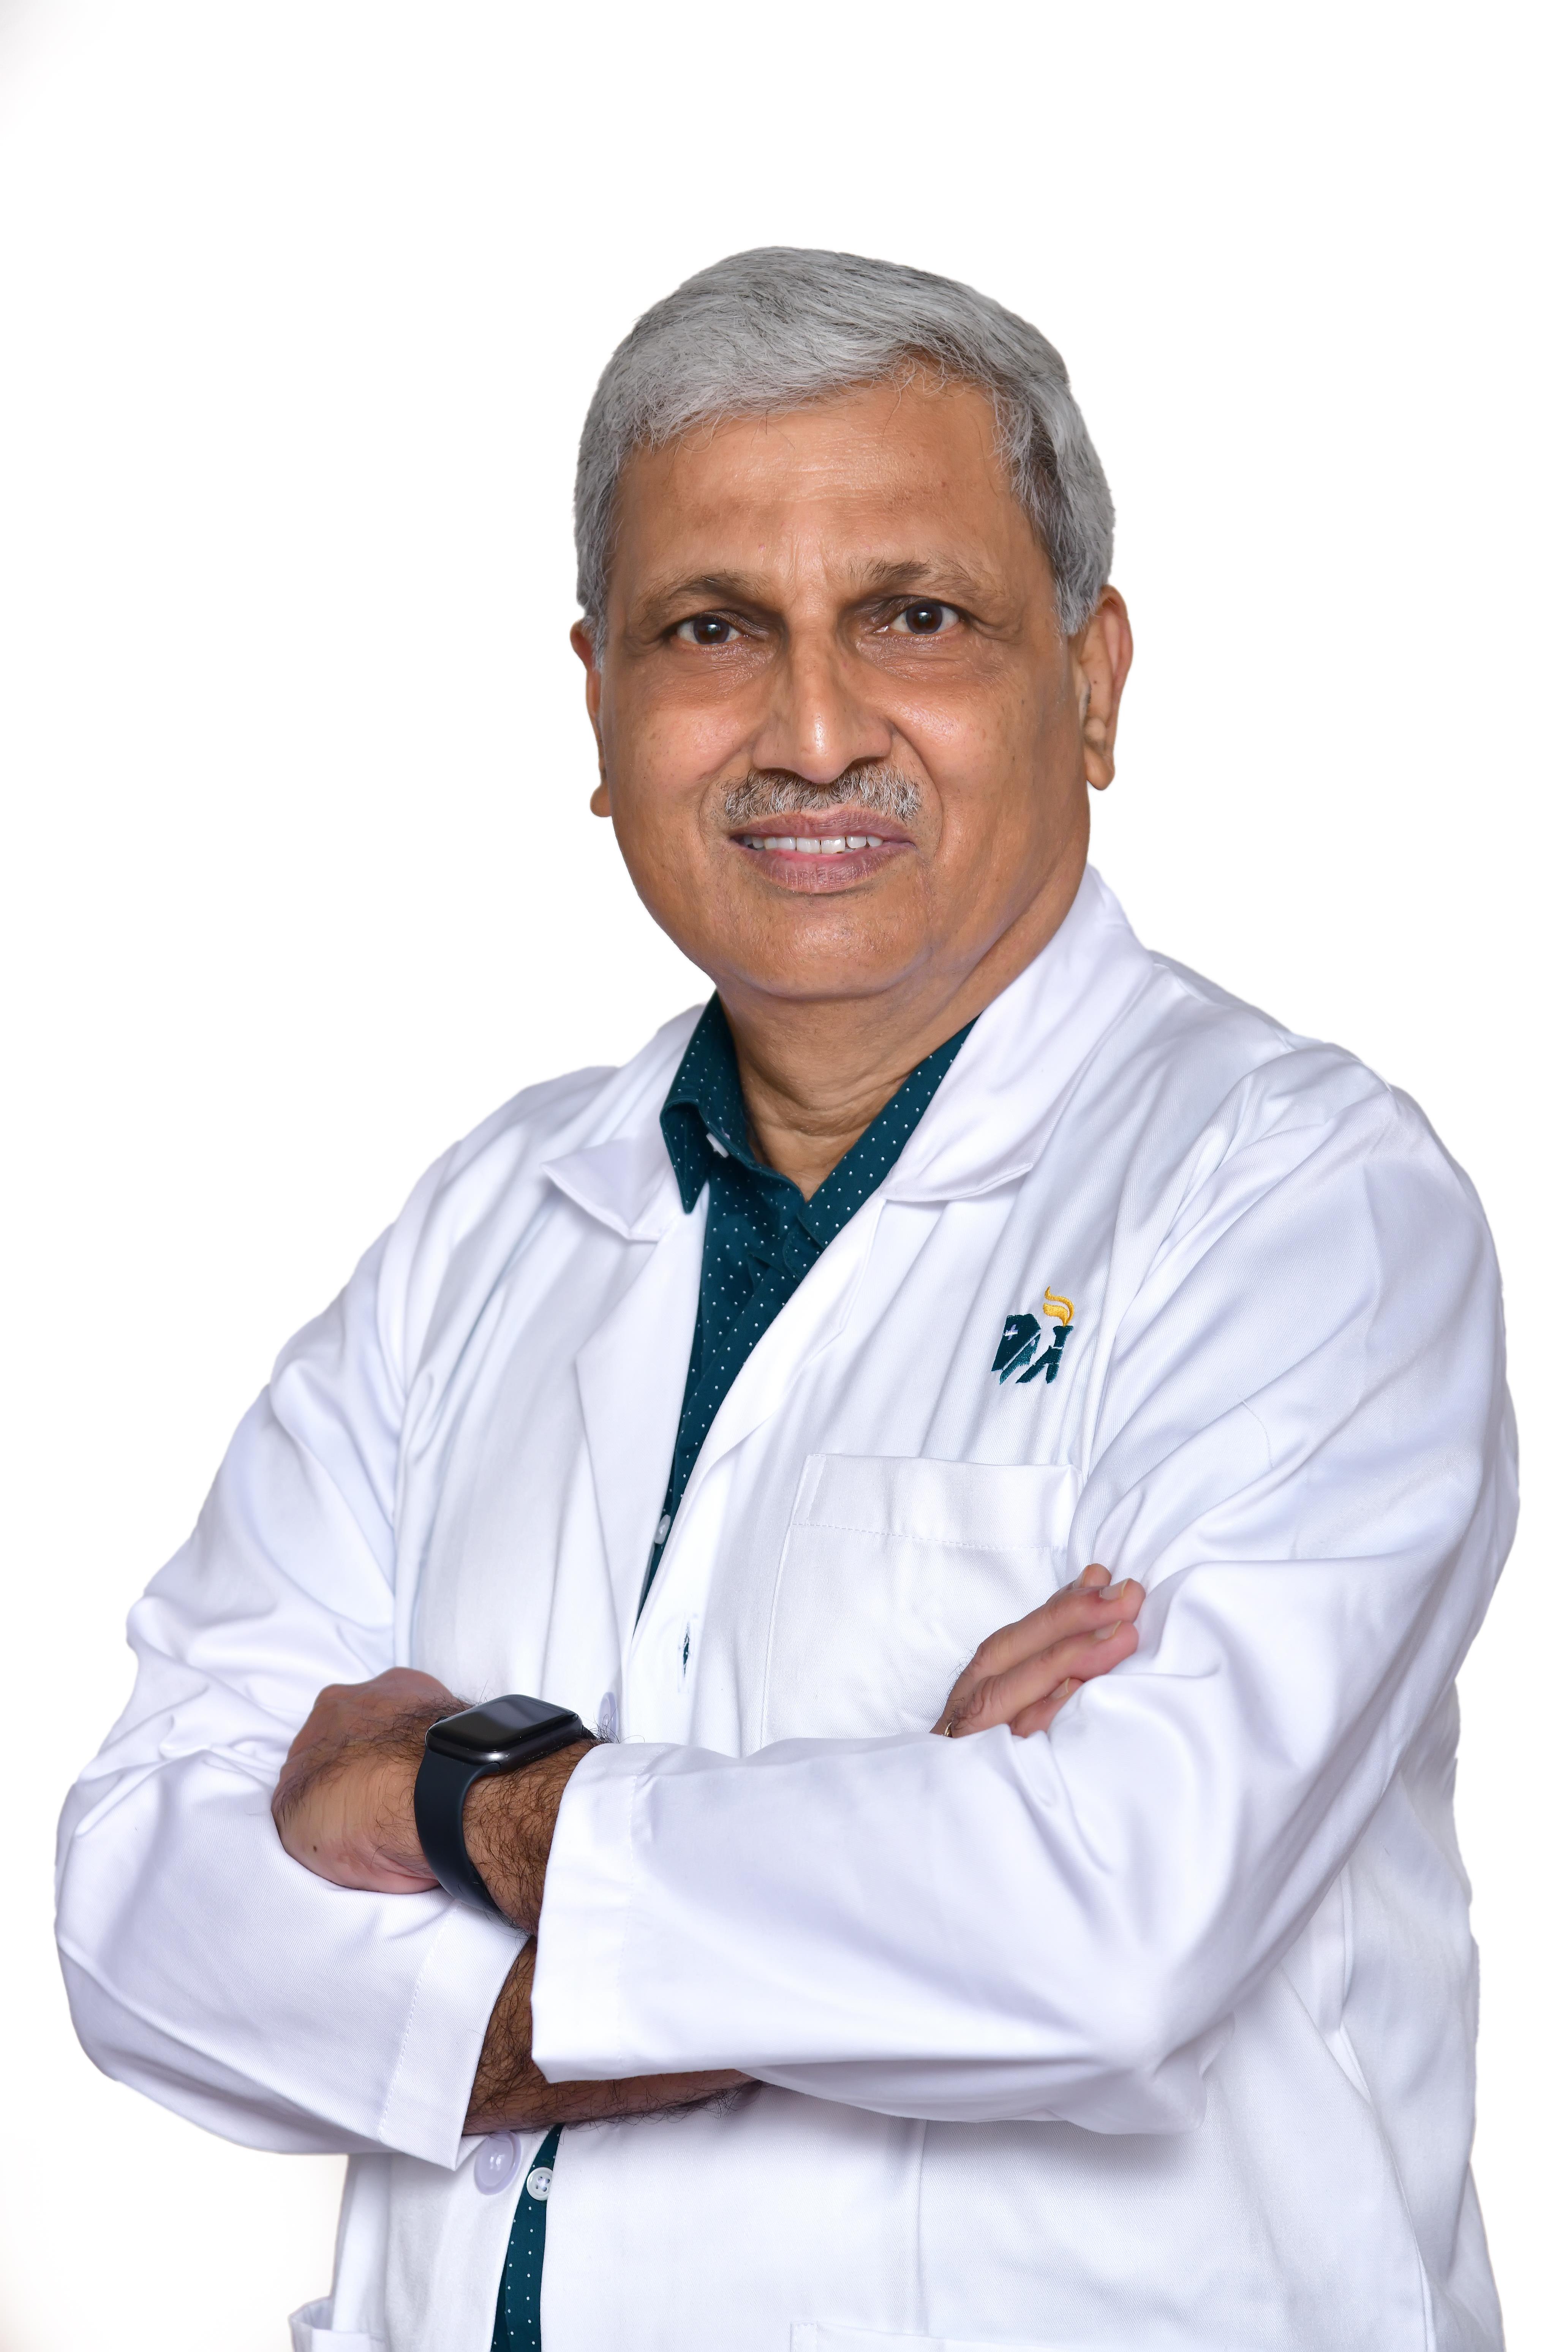 Neurosurgeon in Bangalore